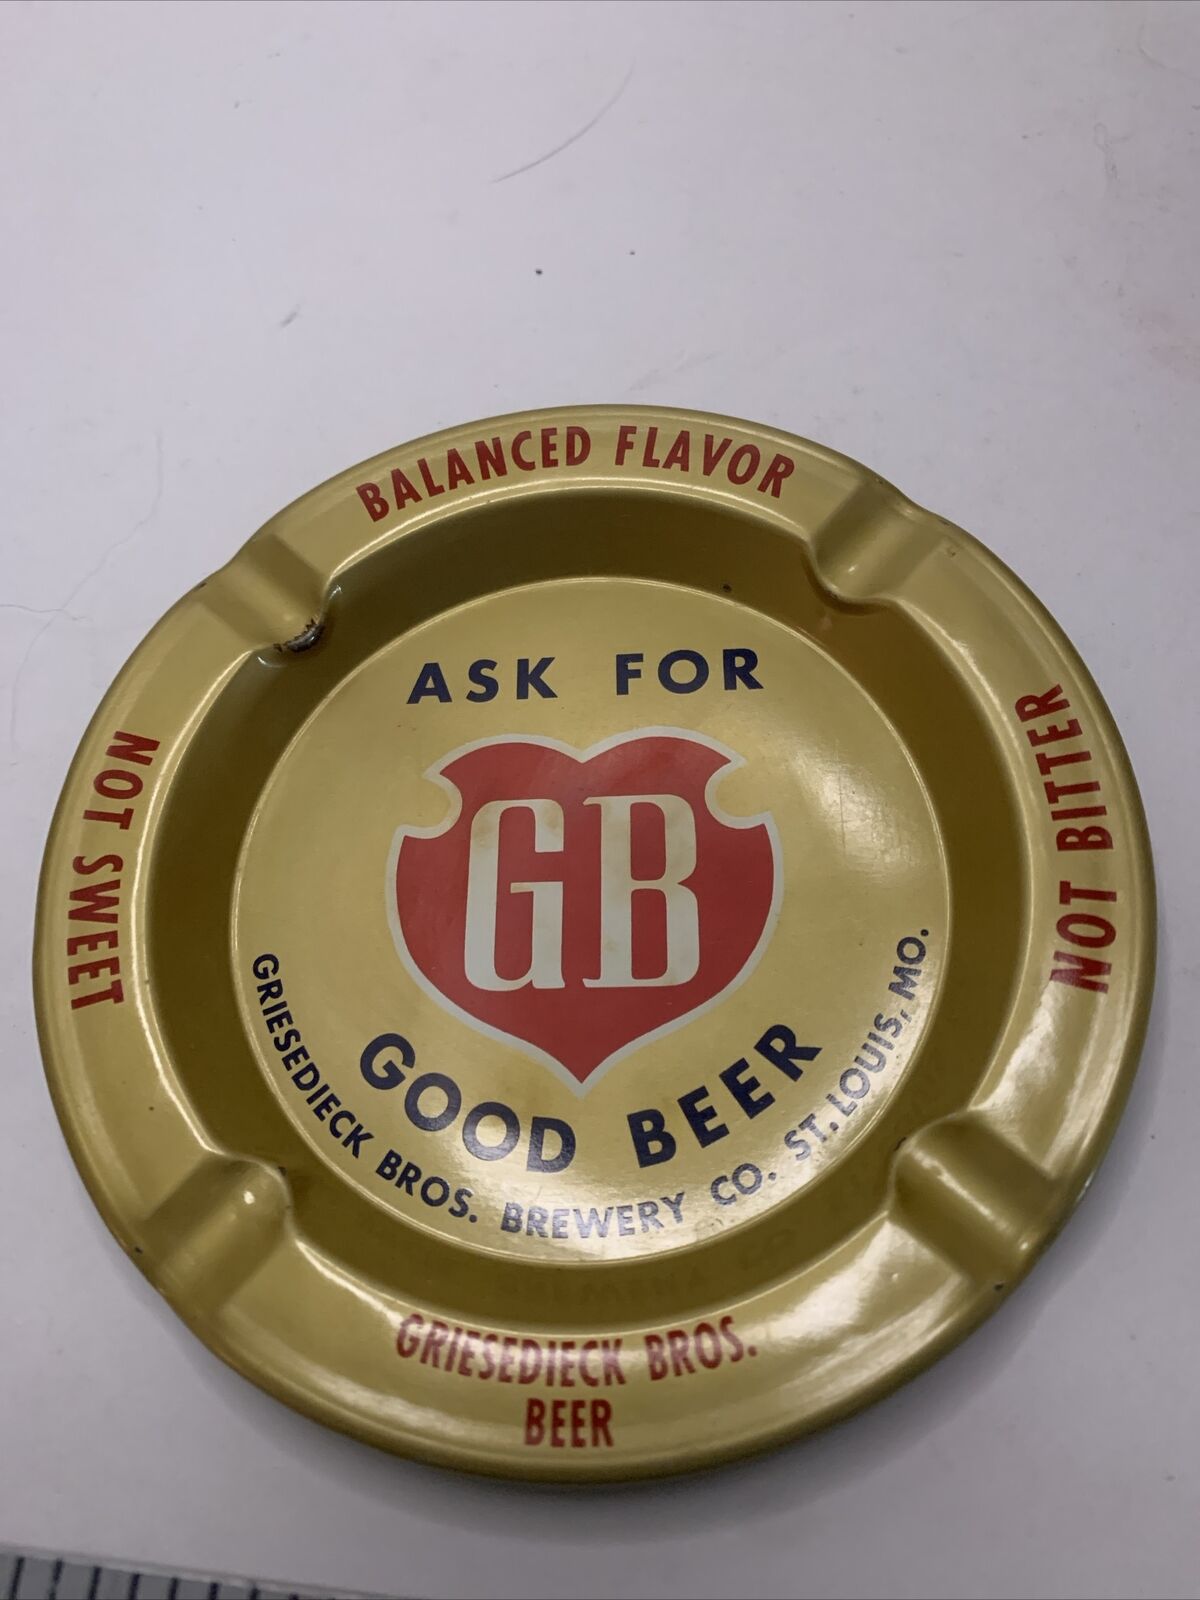 Griesedieck Bros Brewery Co. Good Beer GB Metal Bar Ashtray St. Louis MO Vintage